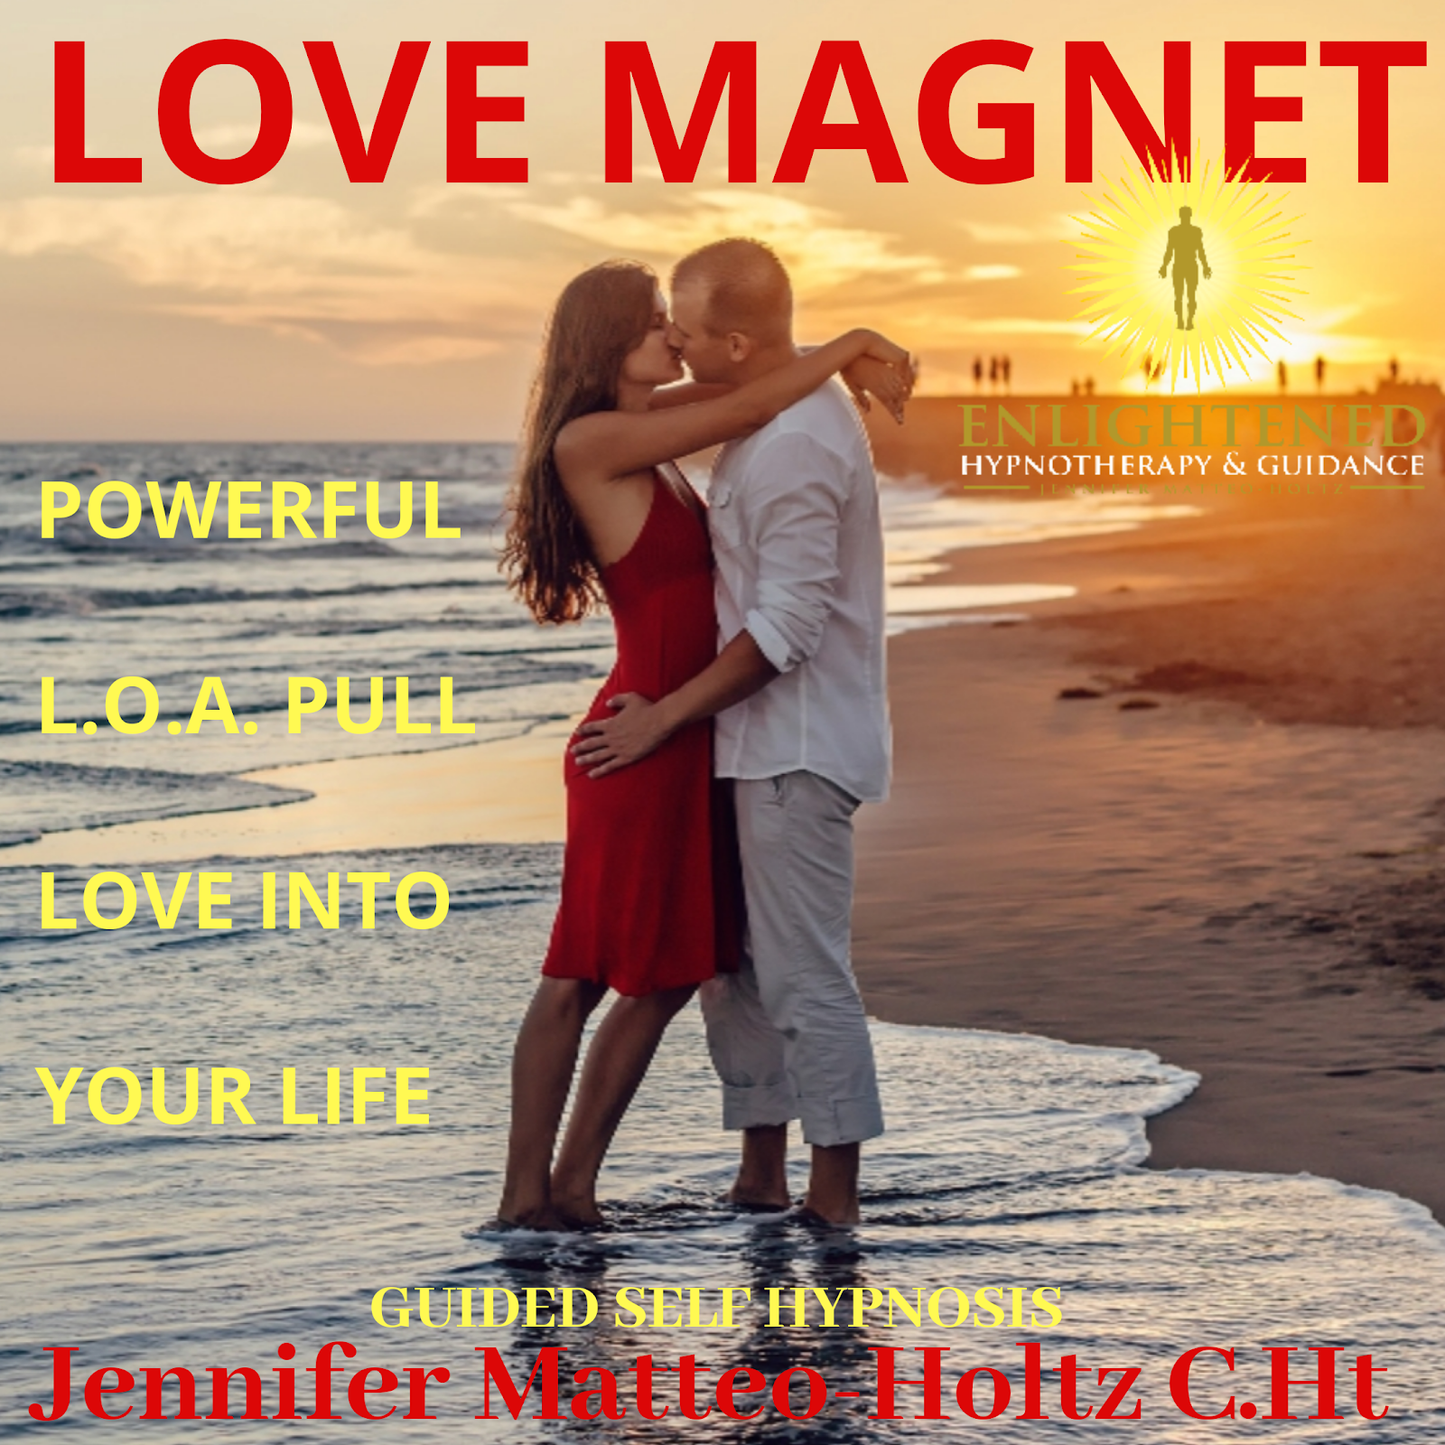 Love Magnet MP3